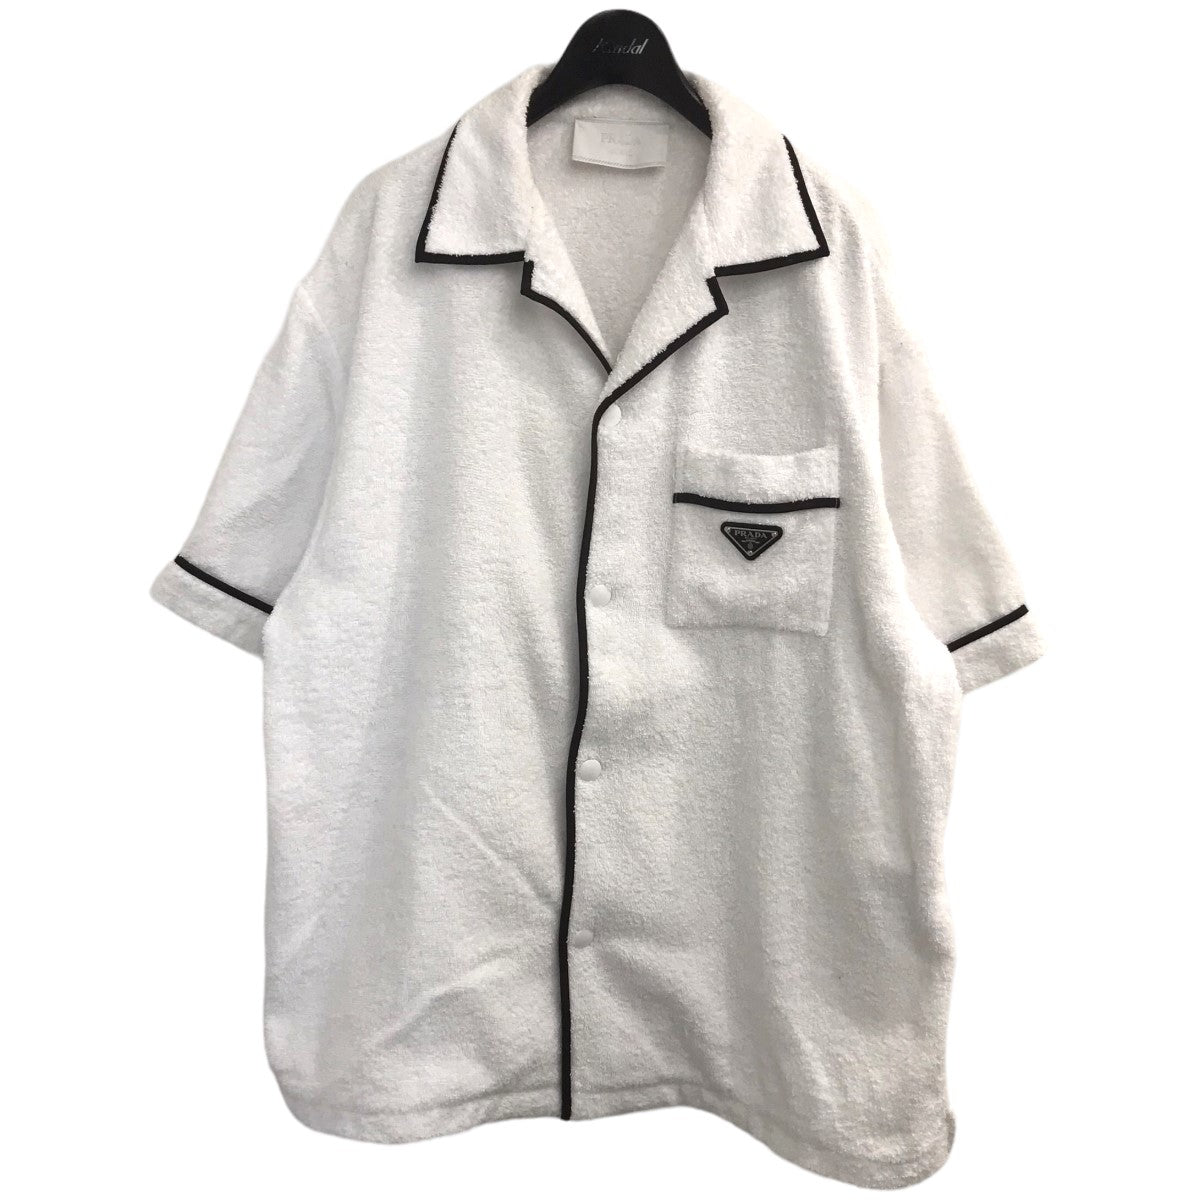 PRADA(プラダ) コットンテリーボウリングシャツ SC559 SC559 ホワイト ...